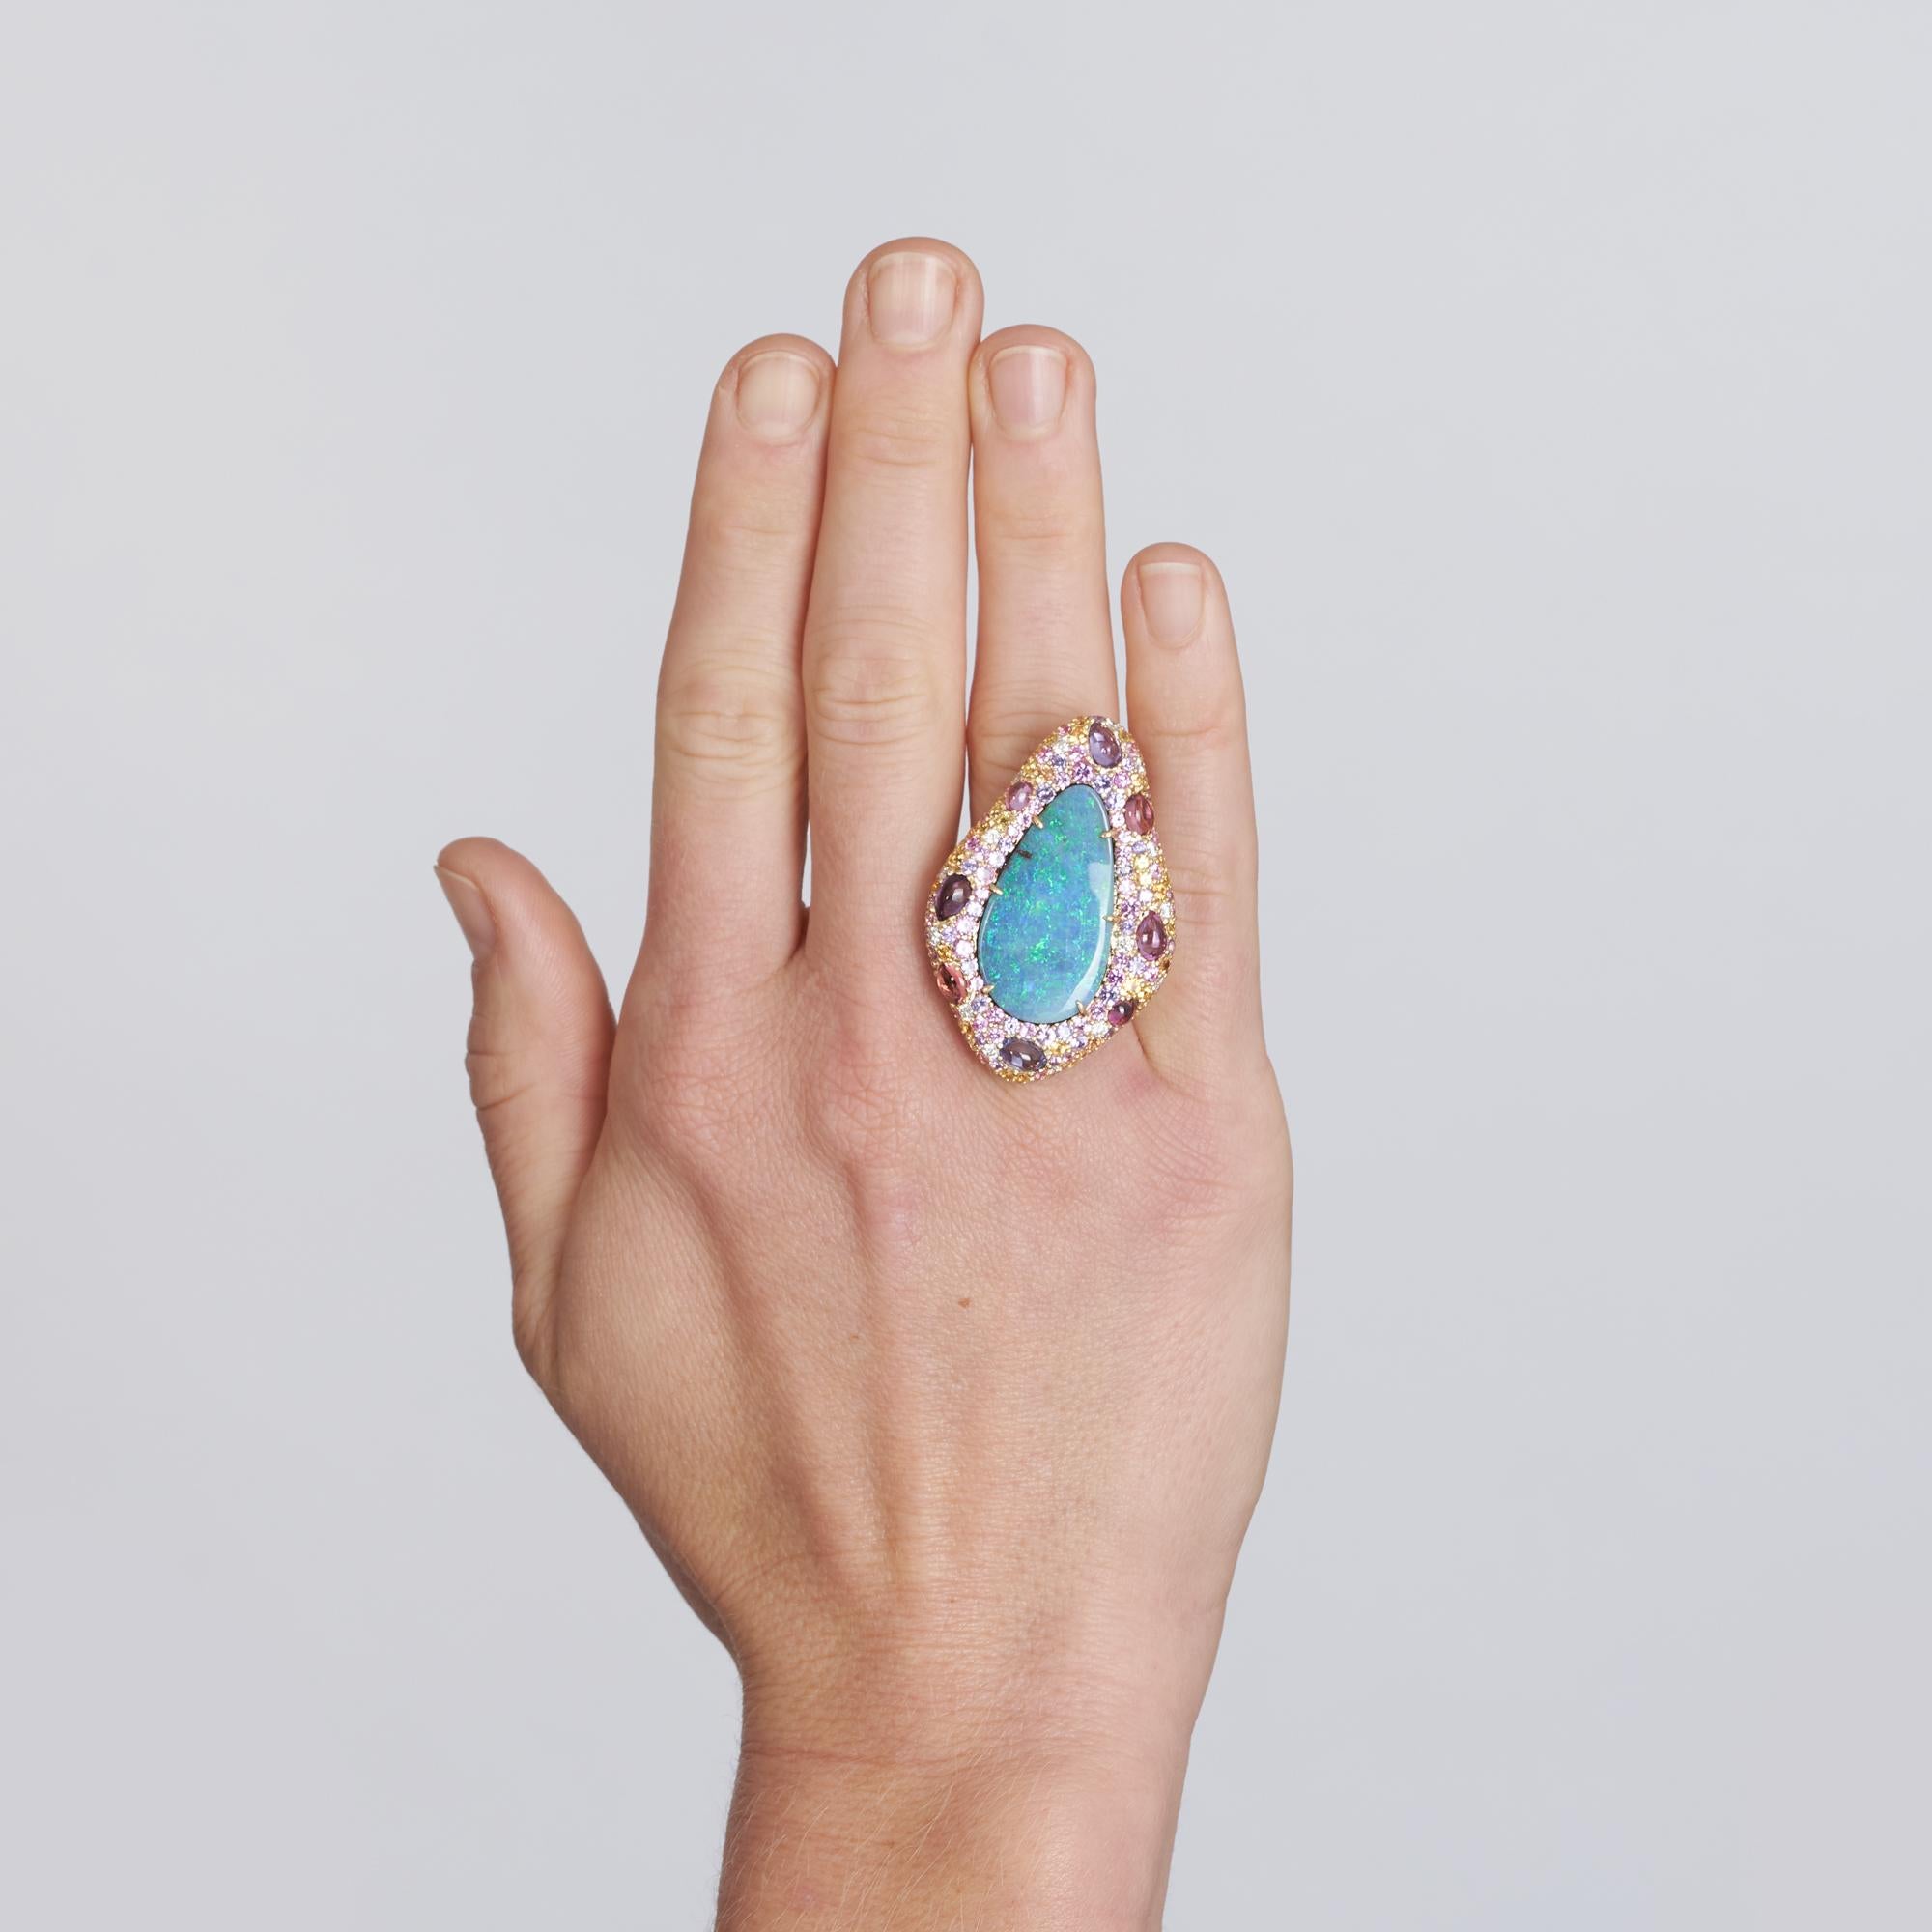 Brilliant Cut Margot McKinney 18kt Yellow Gold Ring with Opal, Yellow Sapphire, Pink Sapphire